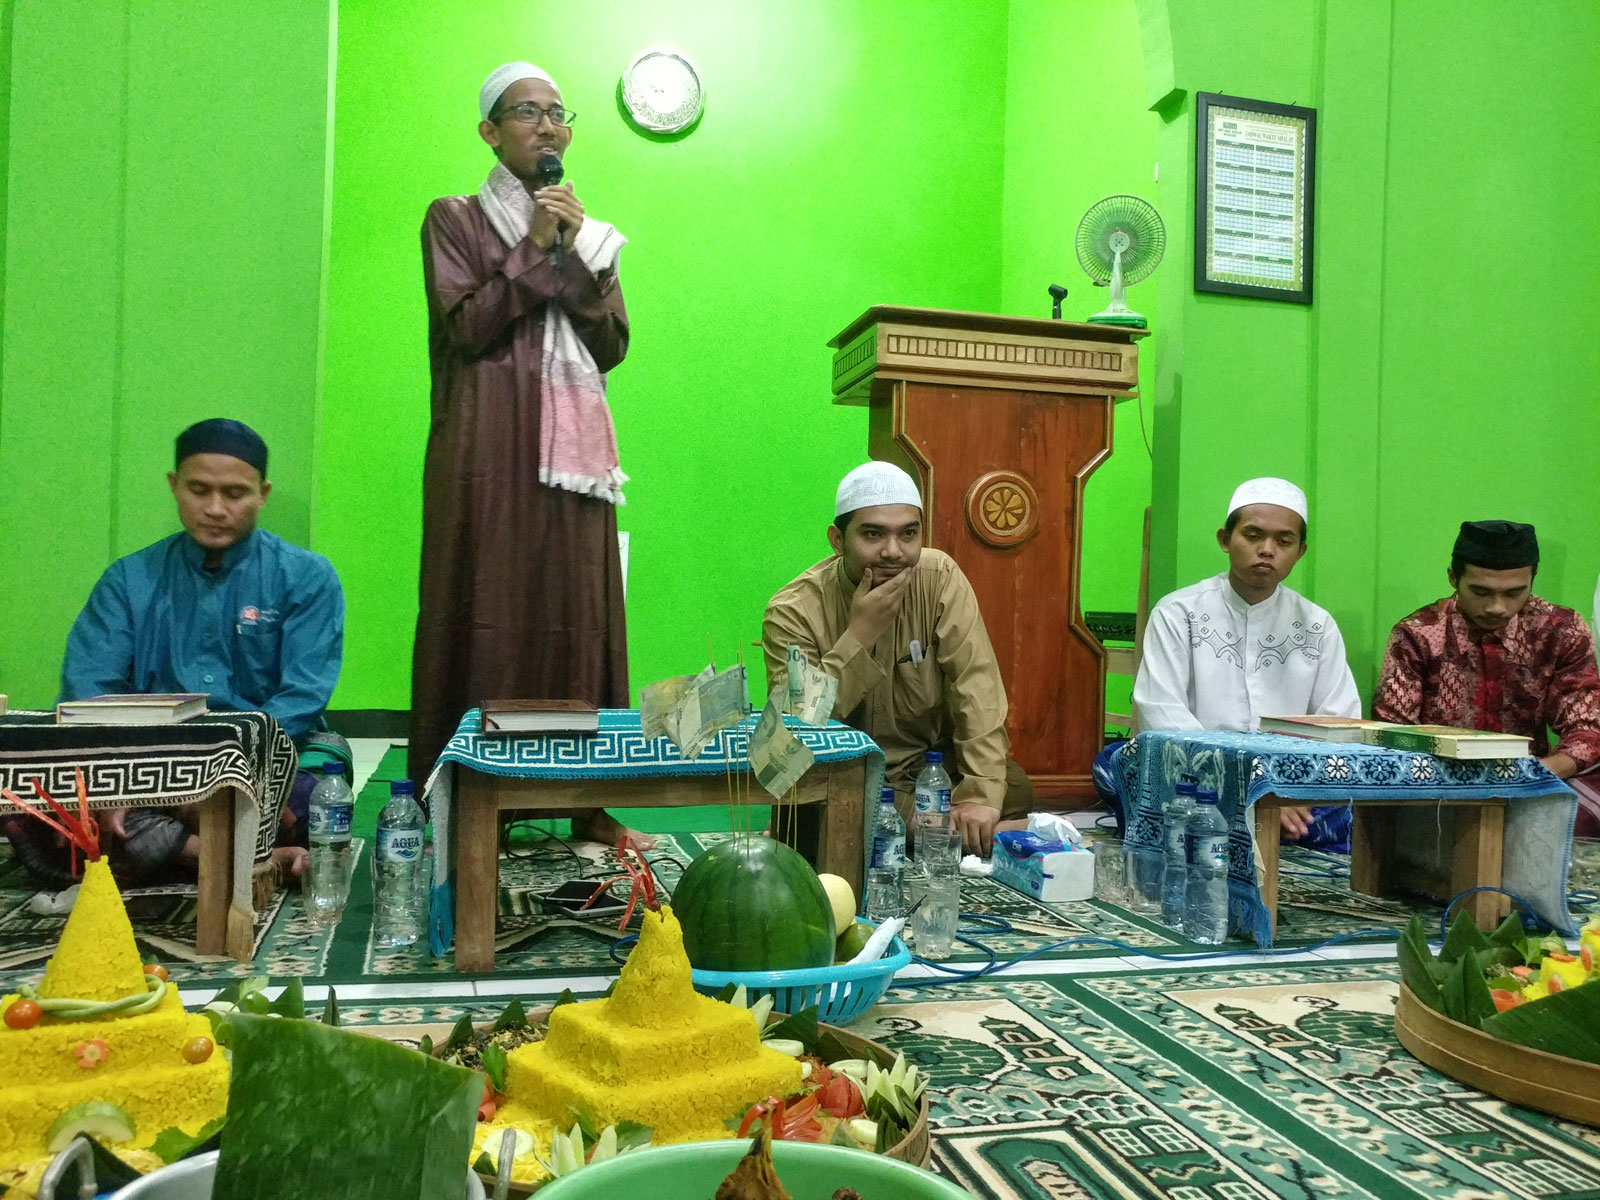 MP3 Rekaman Khataman Qur'an bersama Ustadz Zidan Baslum dan Ustadz Ali Assegaf di Masjid Ar-Rahman Pucung, Eromoko, Wonogiri 2019